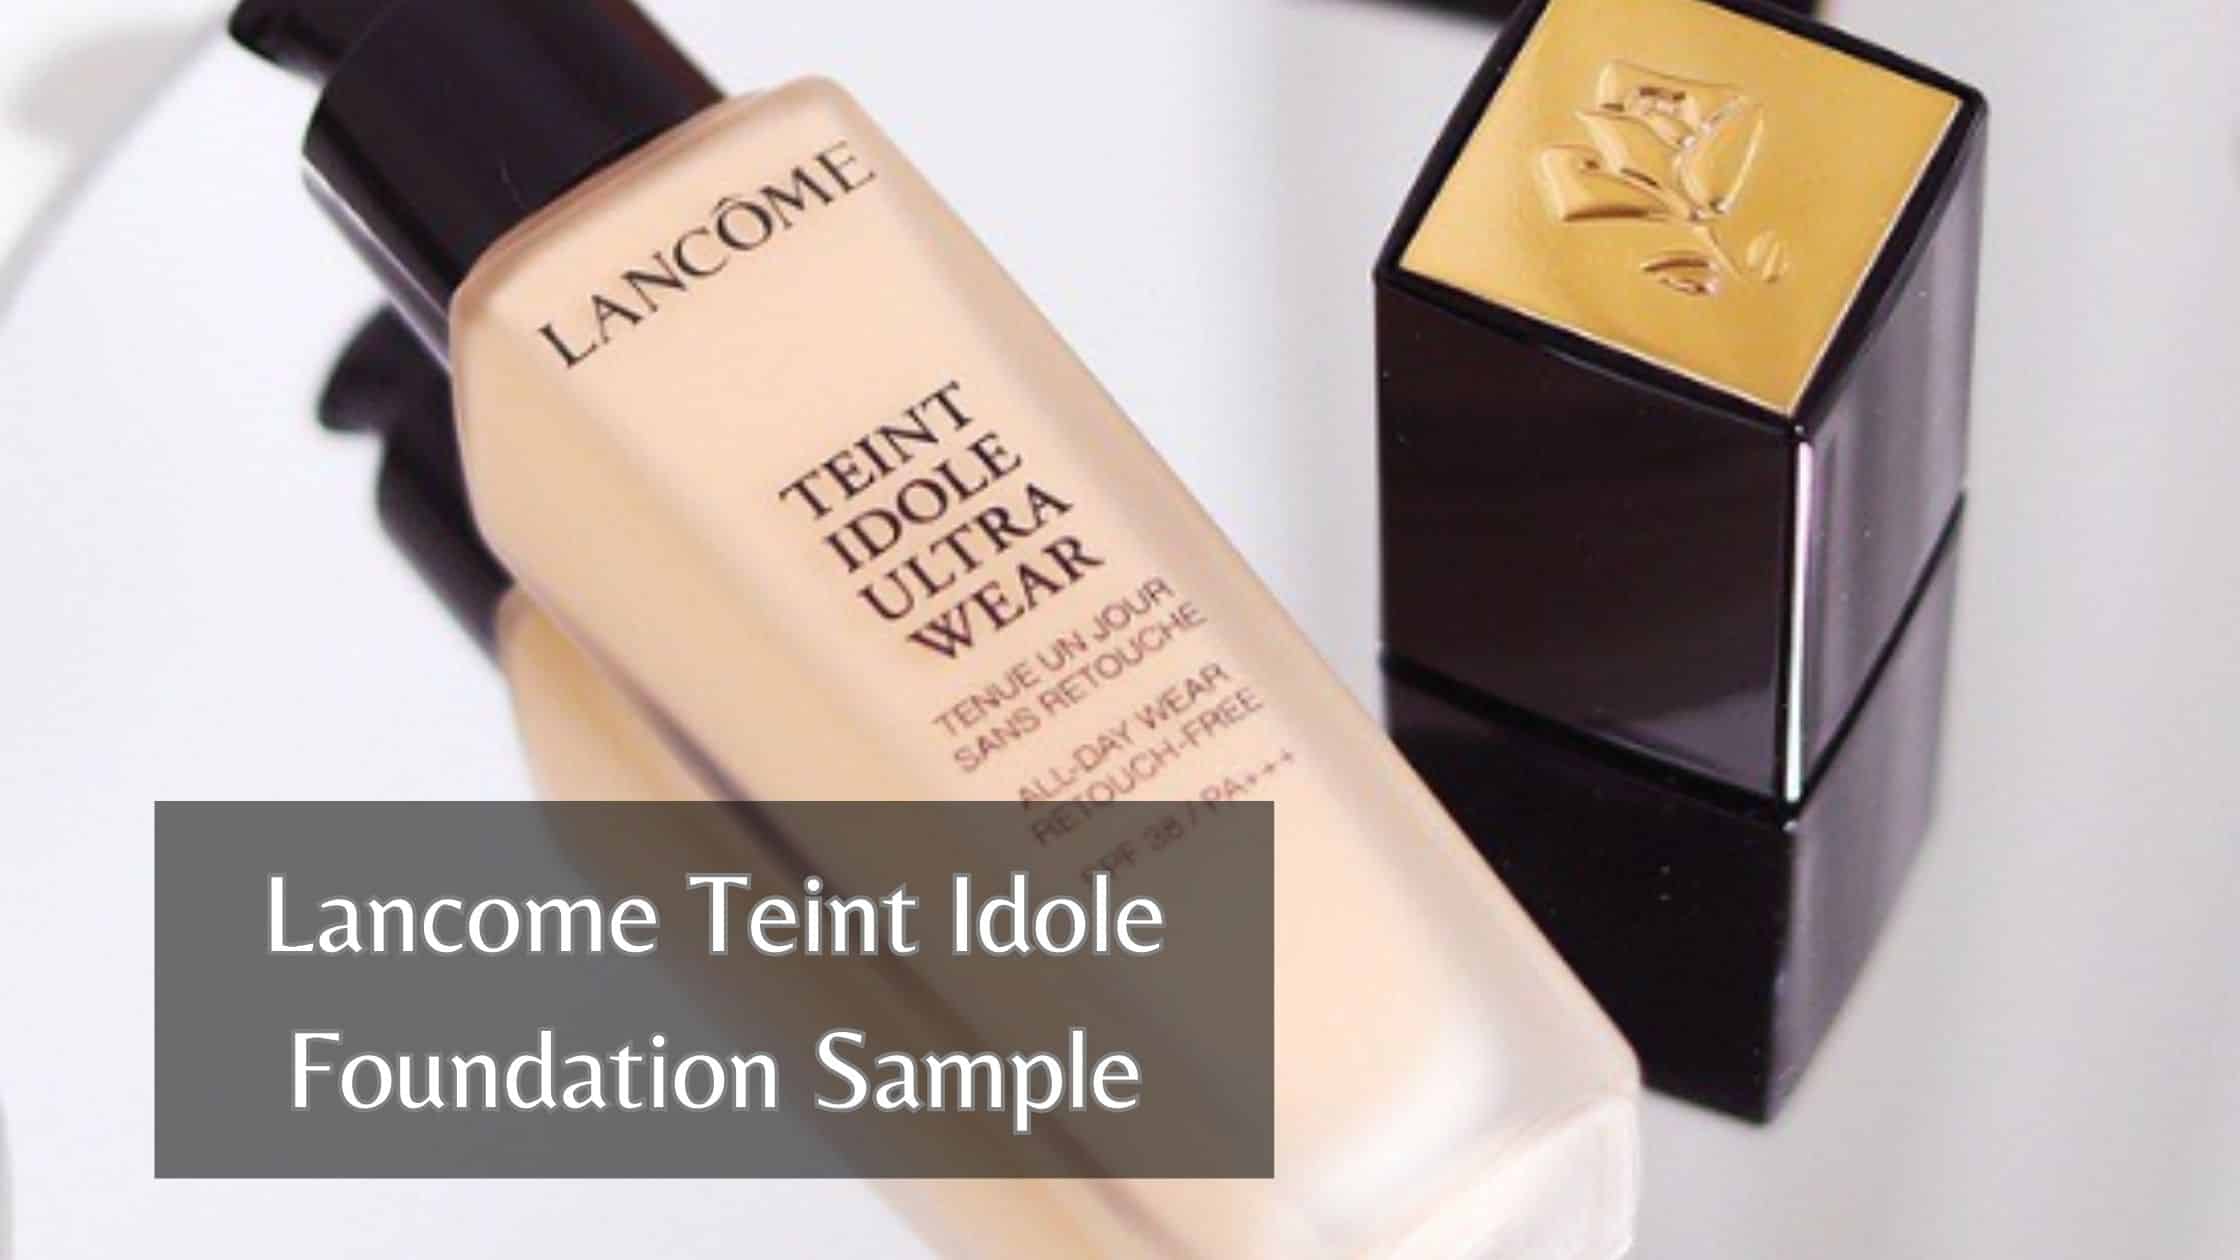 Lancome Teint Idole Foundation Sample